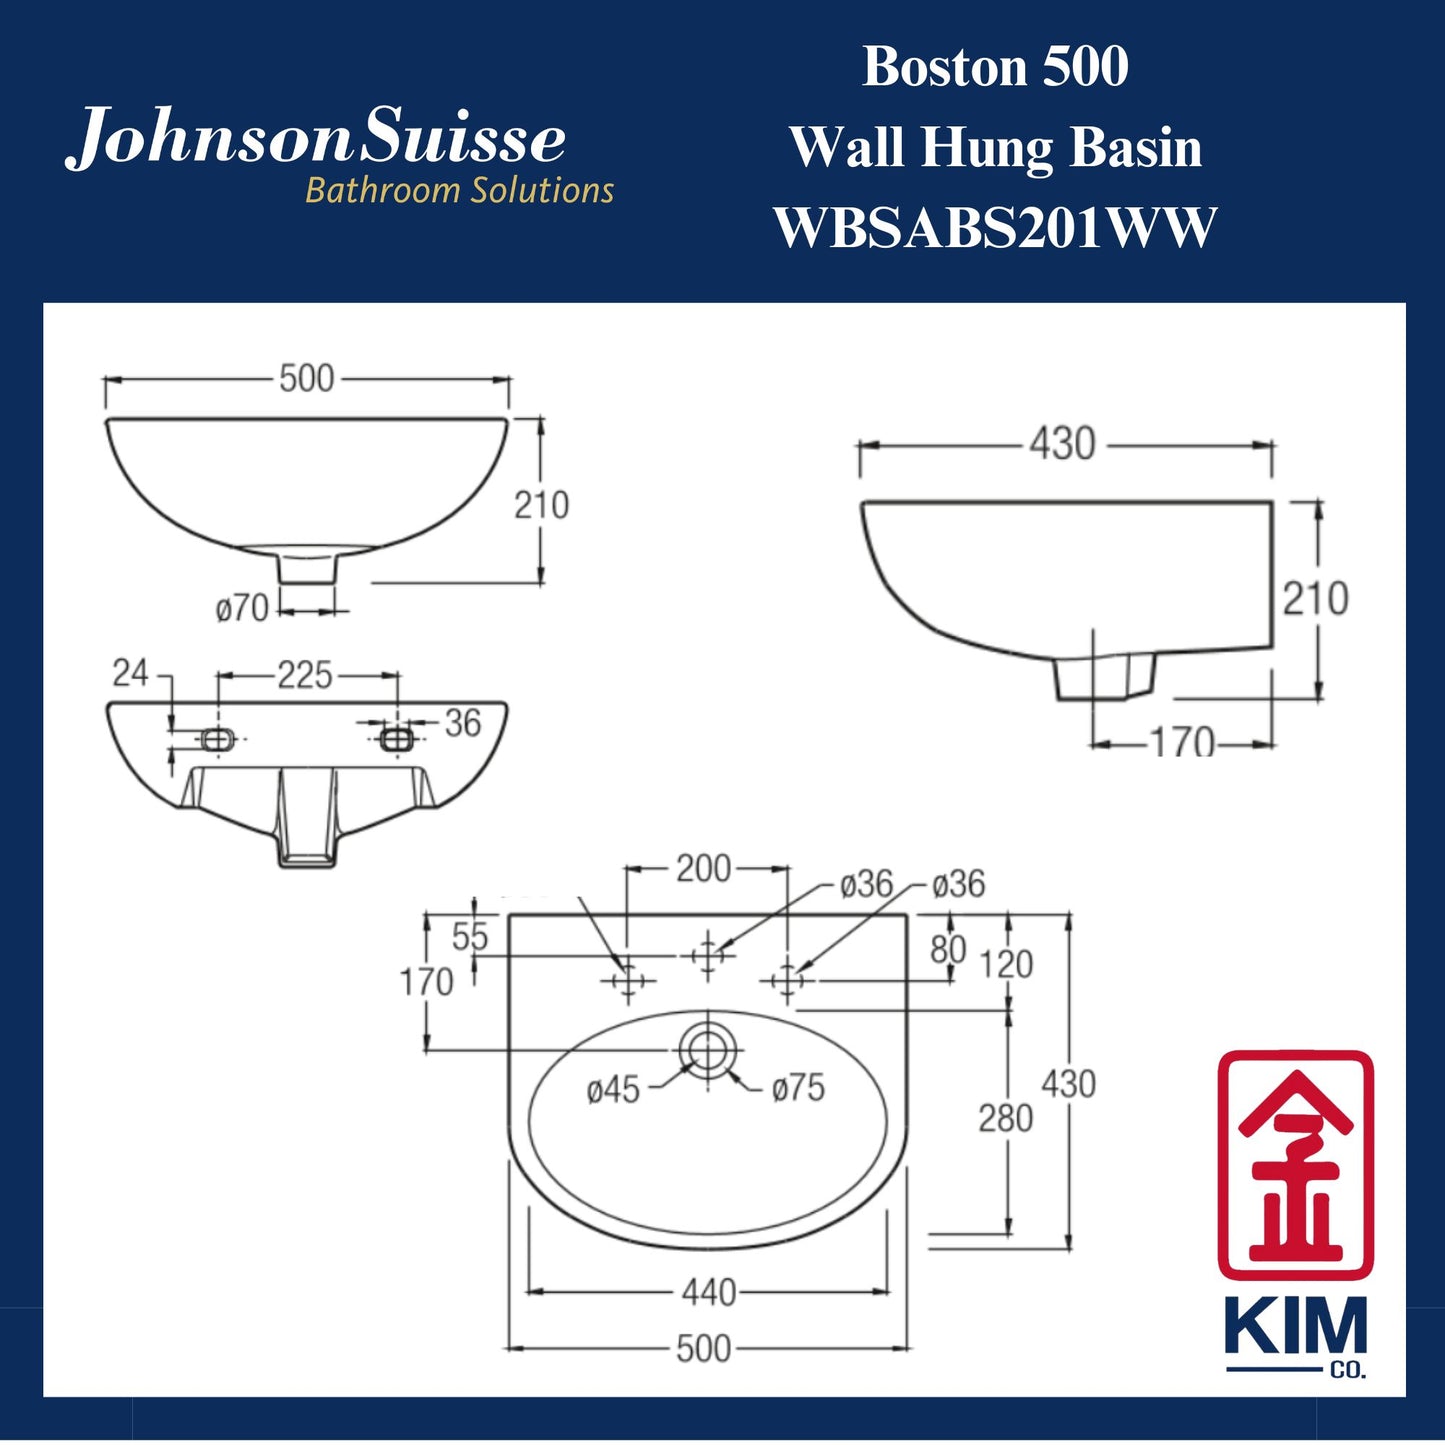 Johnson Suisse Boston 500 Wall Hung Basin (WBSABS201WW)